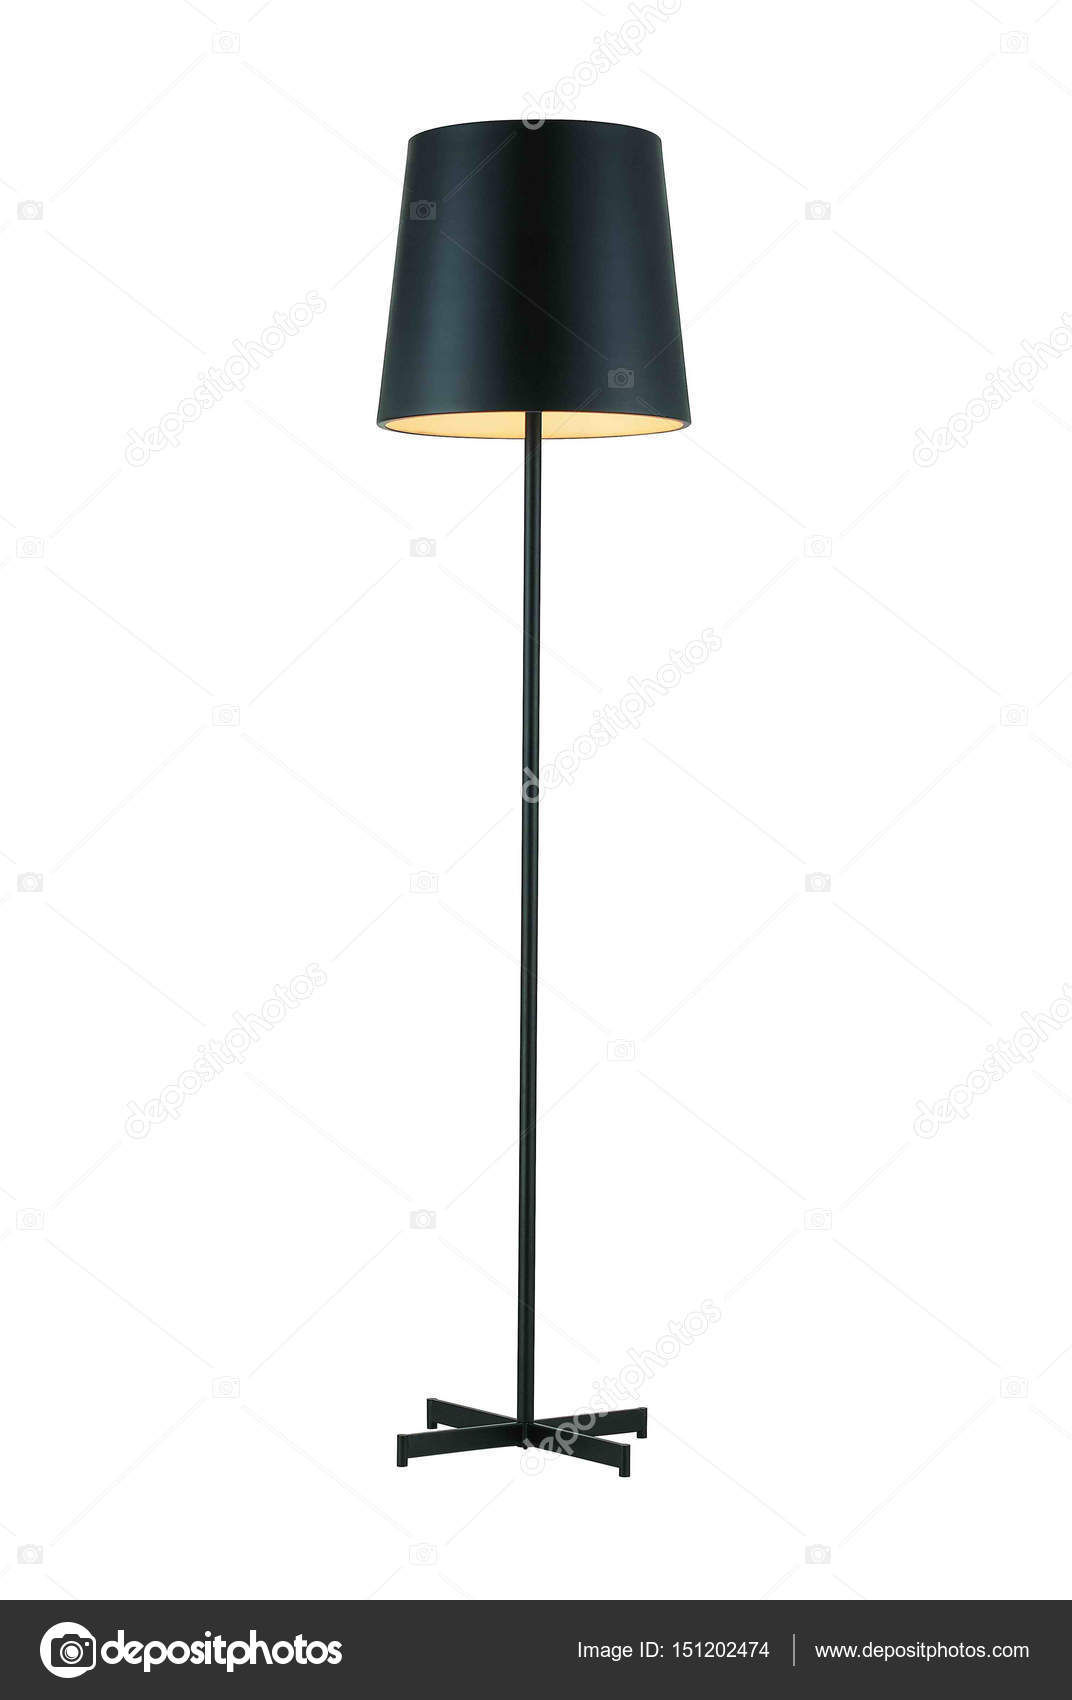 Black Tall Floor Lamp Stock Photo Tangducminh 151202474 pertaining to measurements 1072 X 1700